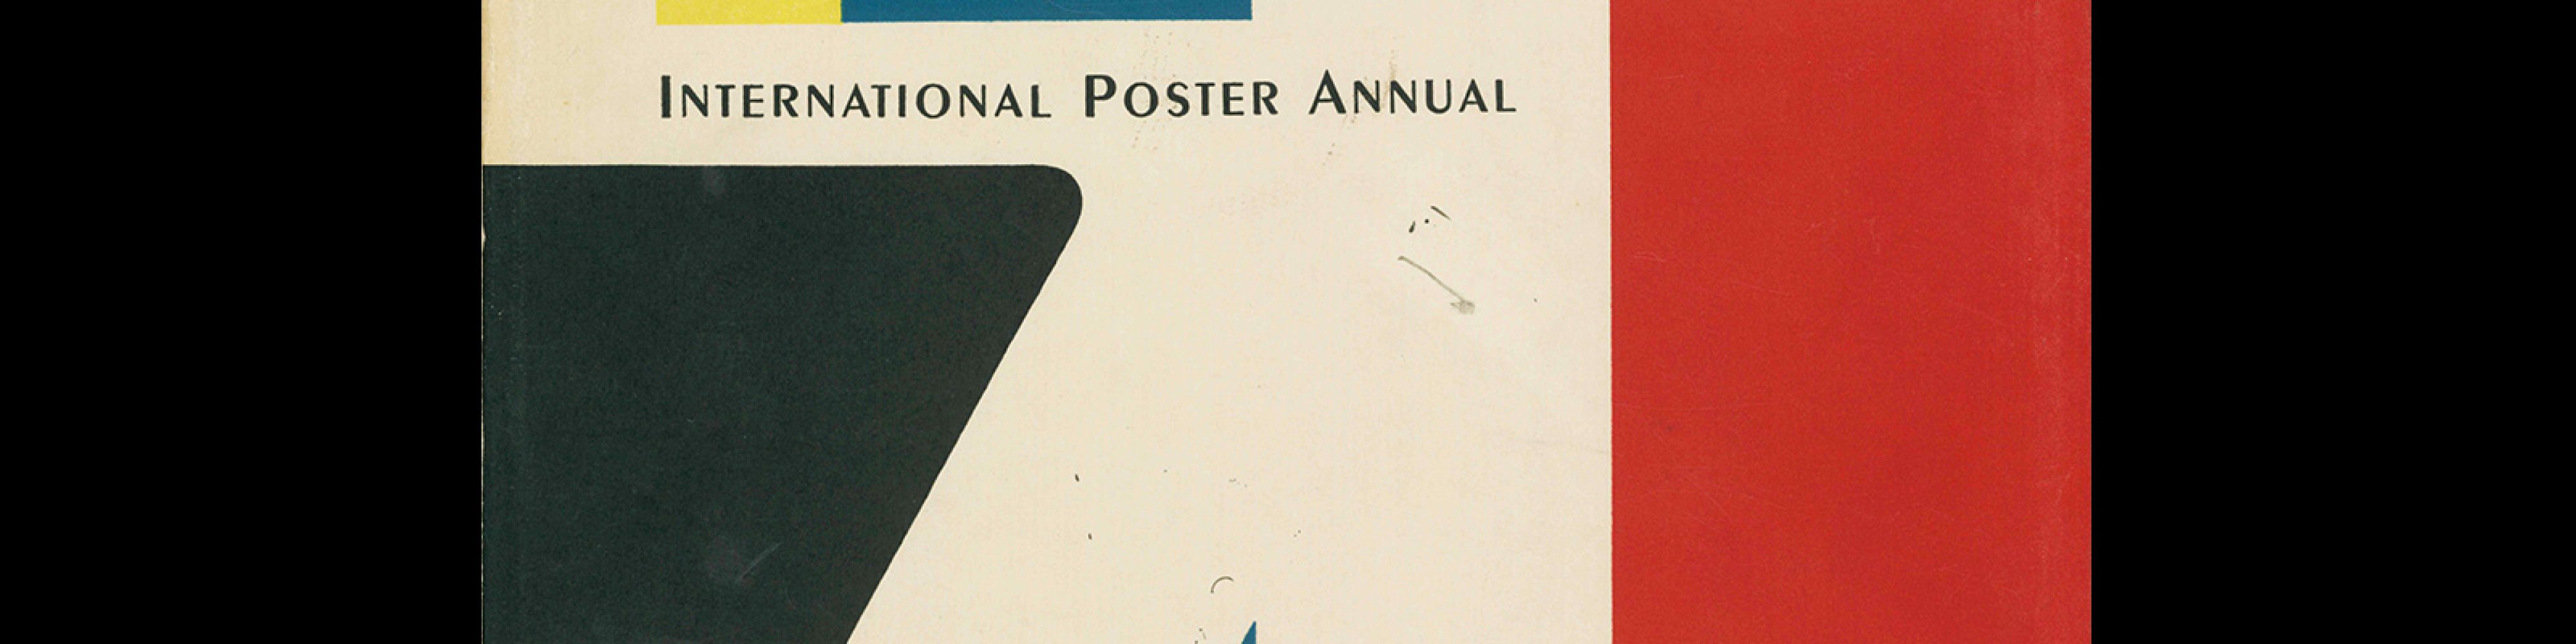 International Poster Annual - 1950. Designed by Walter Allner